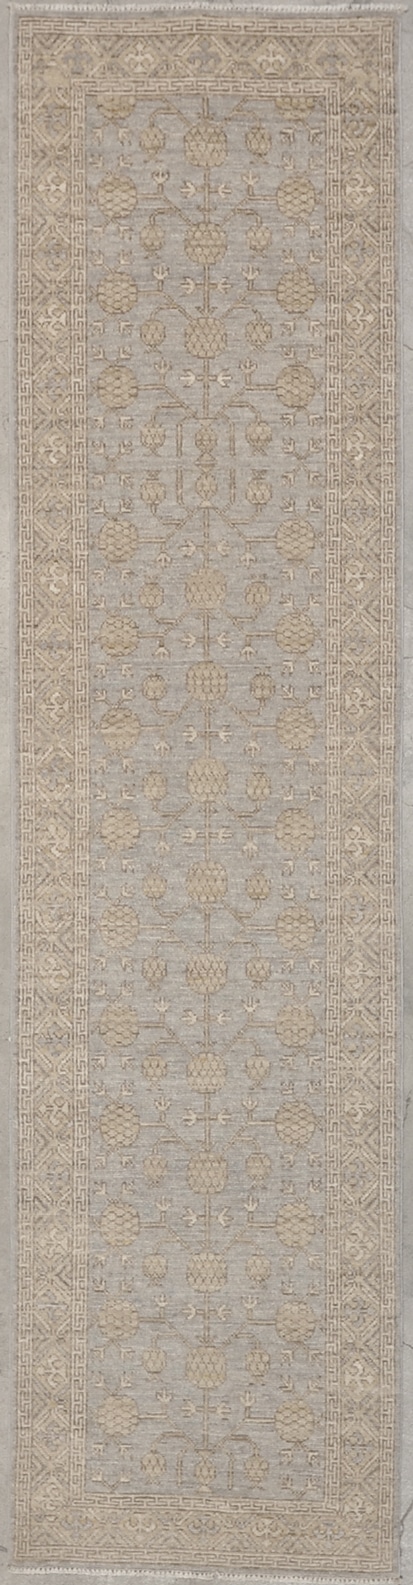 Finest Ziegler Khotan rugs and more oriental carpet 46897-1